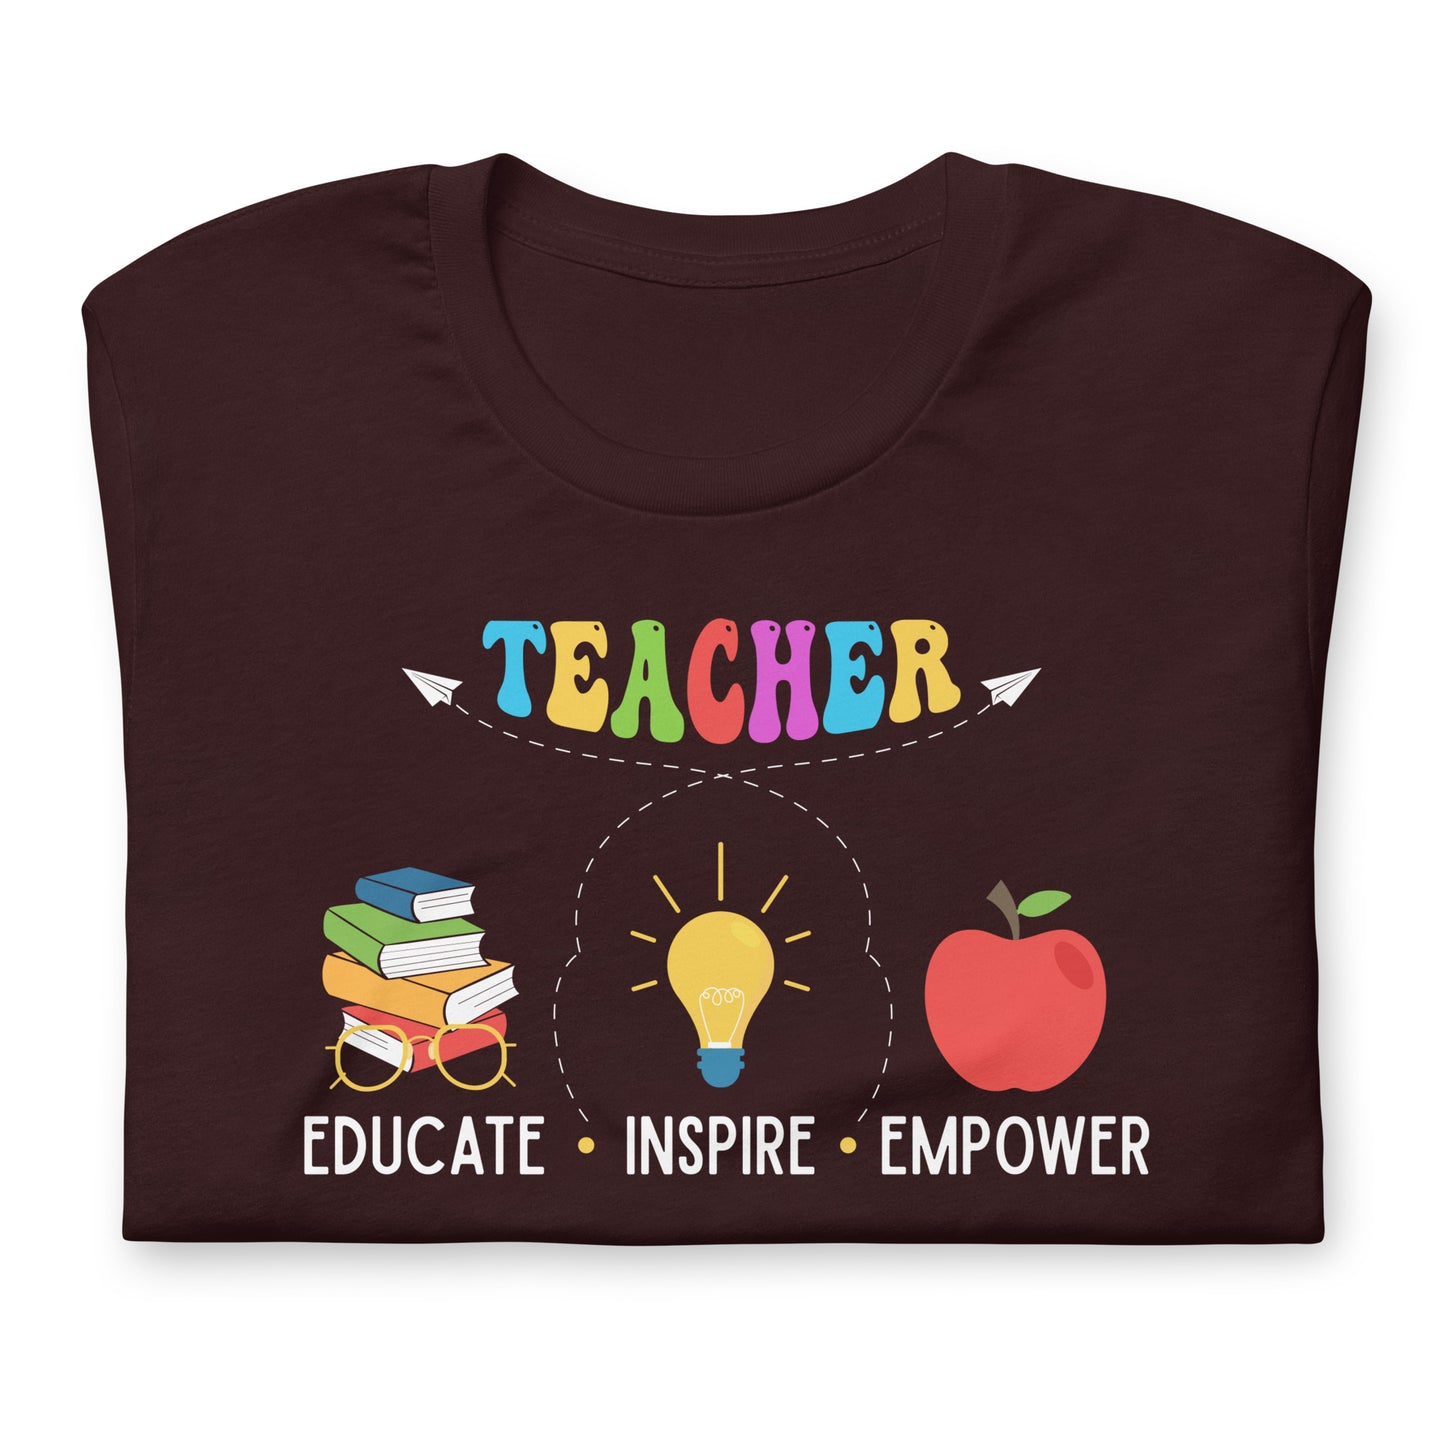 Educate, Inspire, Empower Teacher Quality Cotton Bella Canvas Adult T-Shirt